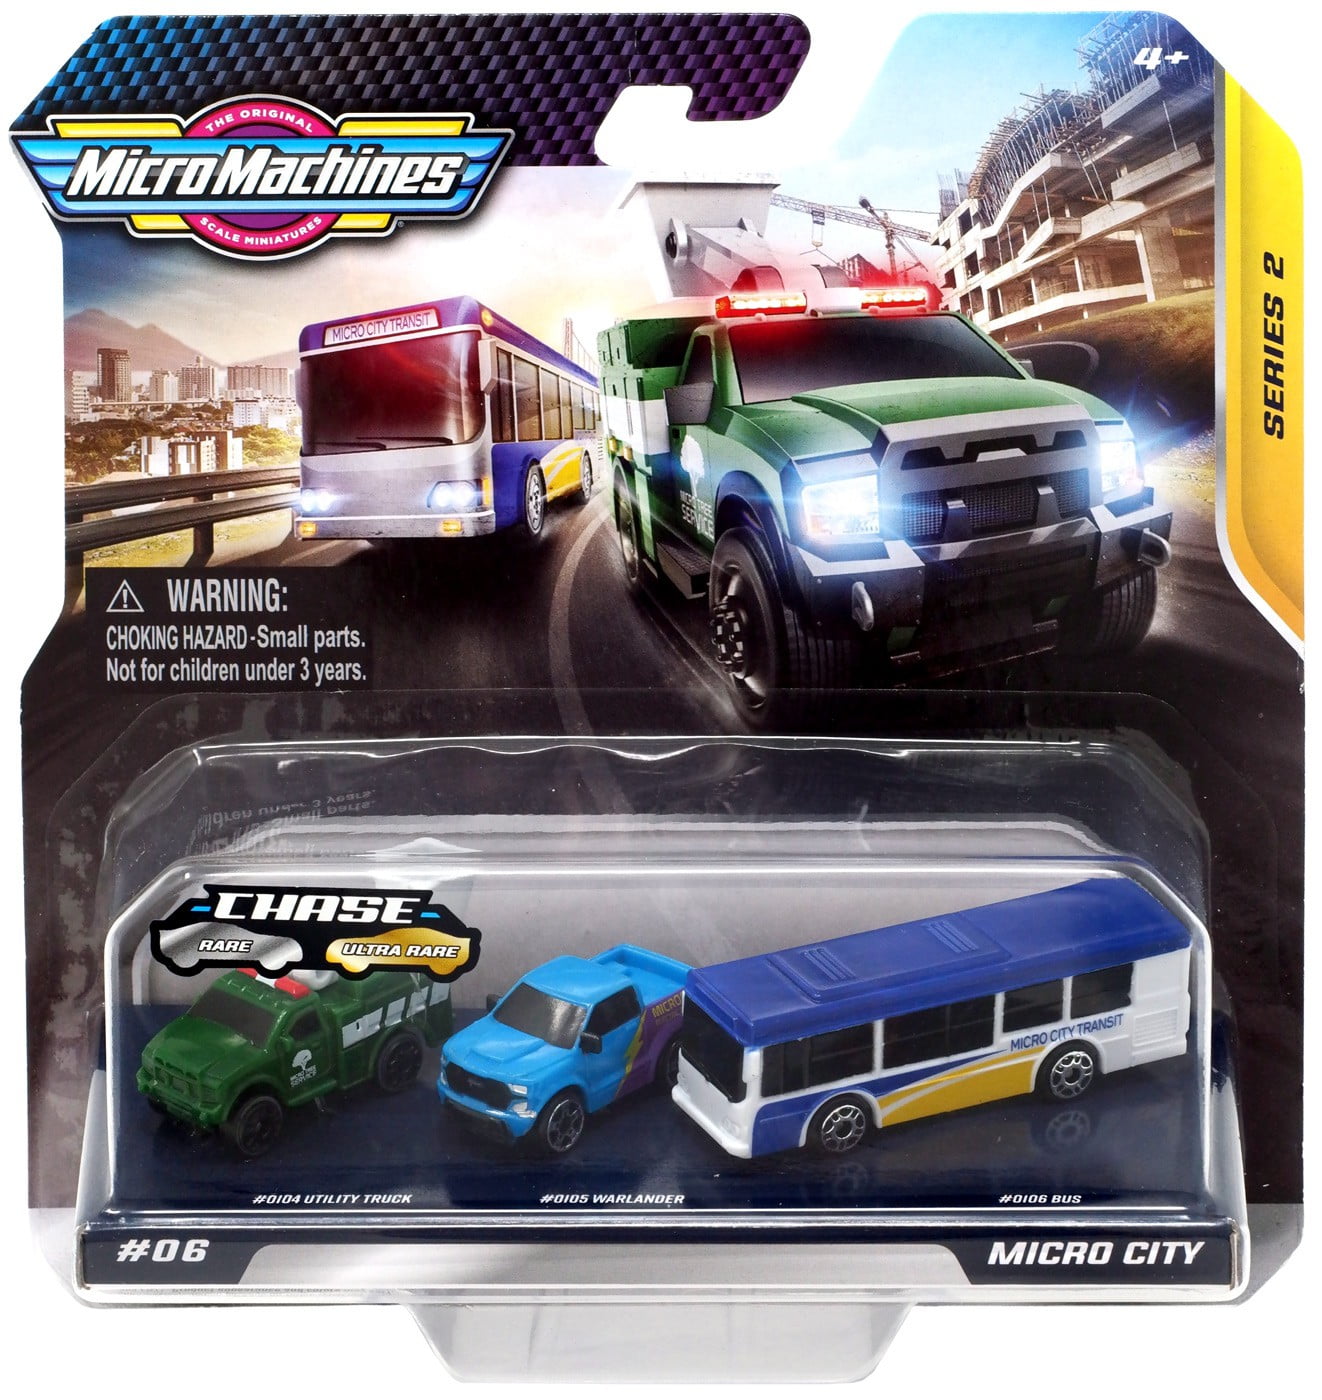 Sonix City Toy Raceway Interactive Playset Interactive Sound Micro Vehicles Kids 